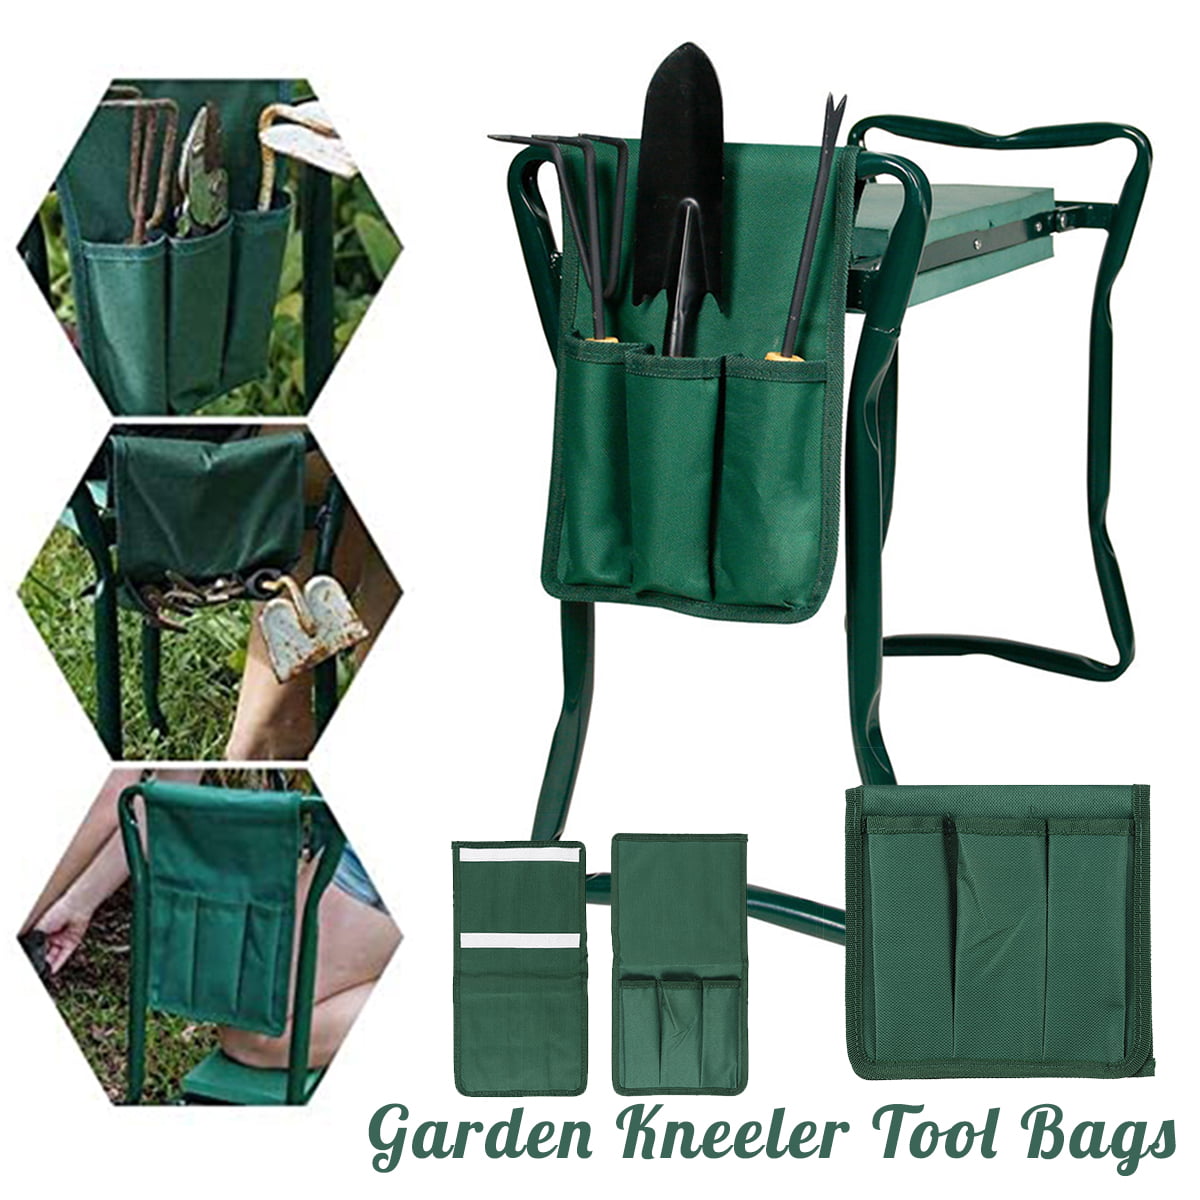 Green FakeFace Oxford Garden Kneeler Tools Bag Portable Garden Stool Storage Bag Pouch Gardening Kneeling Chair Bag Outdoor Folding Storage Bag with Handle for Garden Patio Garage